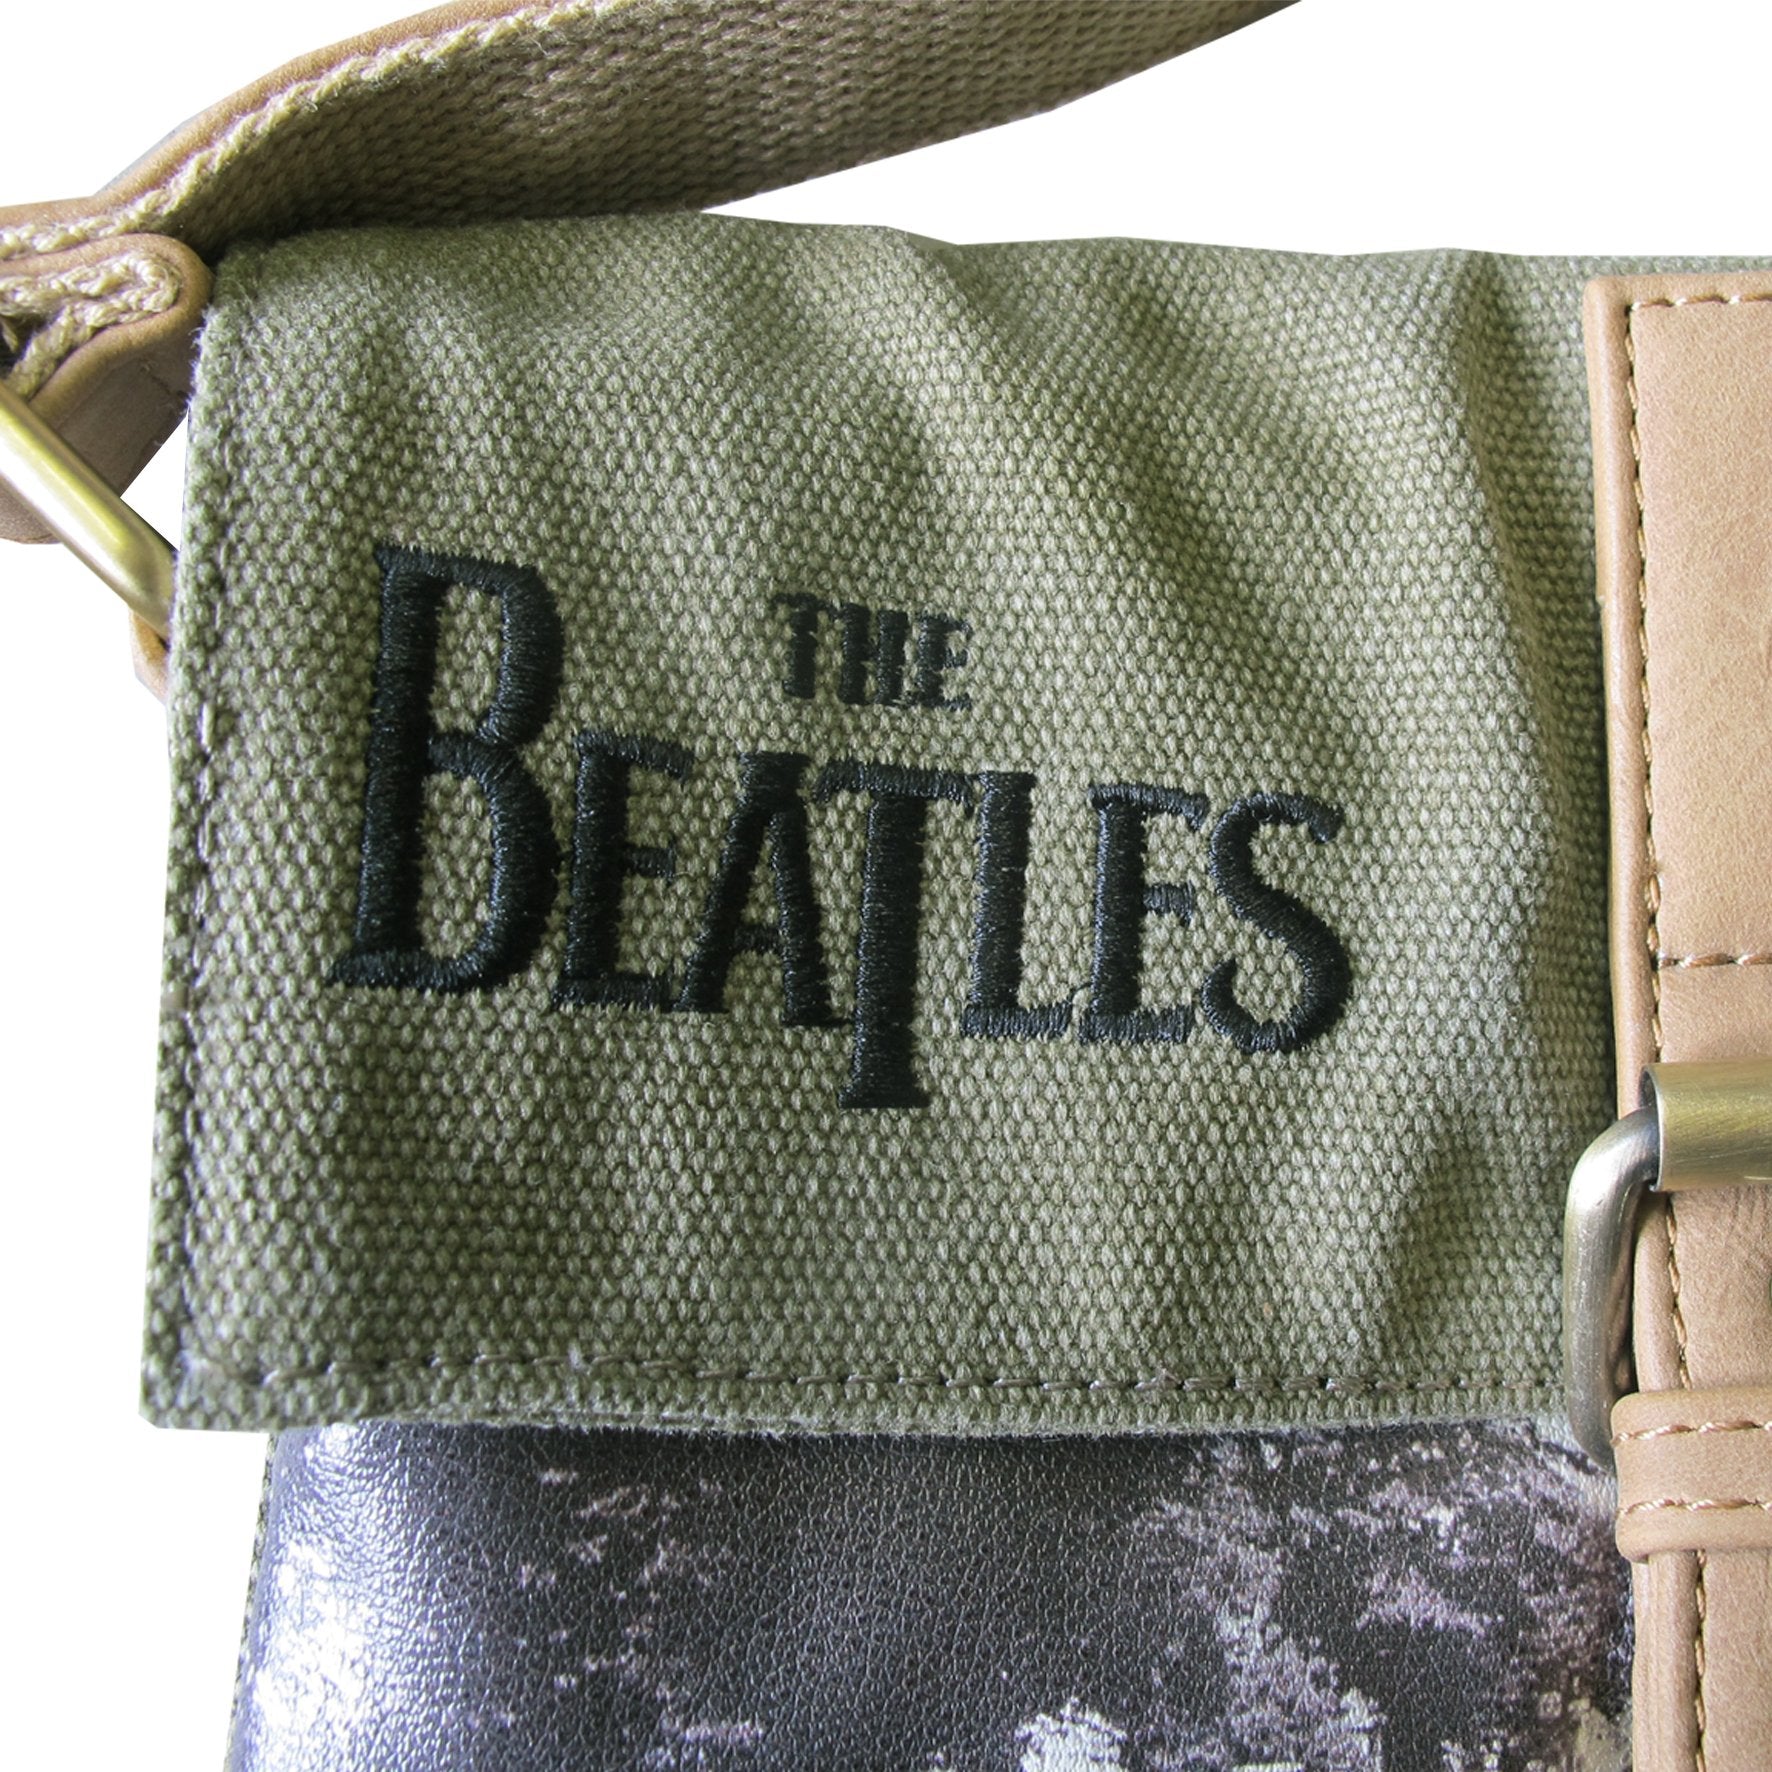 The Beatles Abbey Road Green Mini Bag